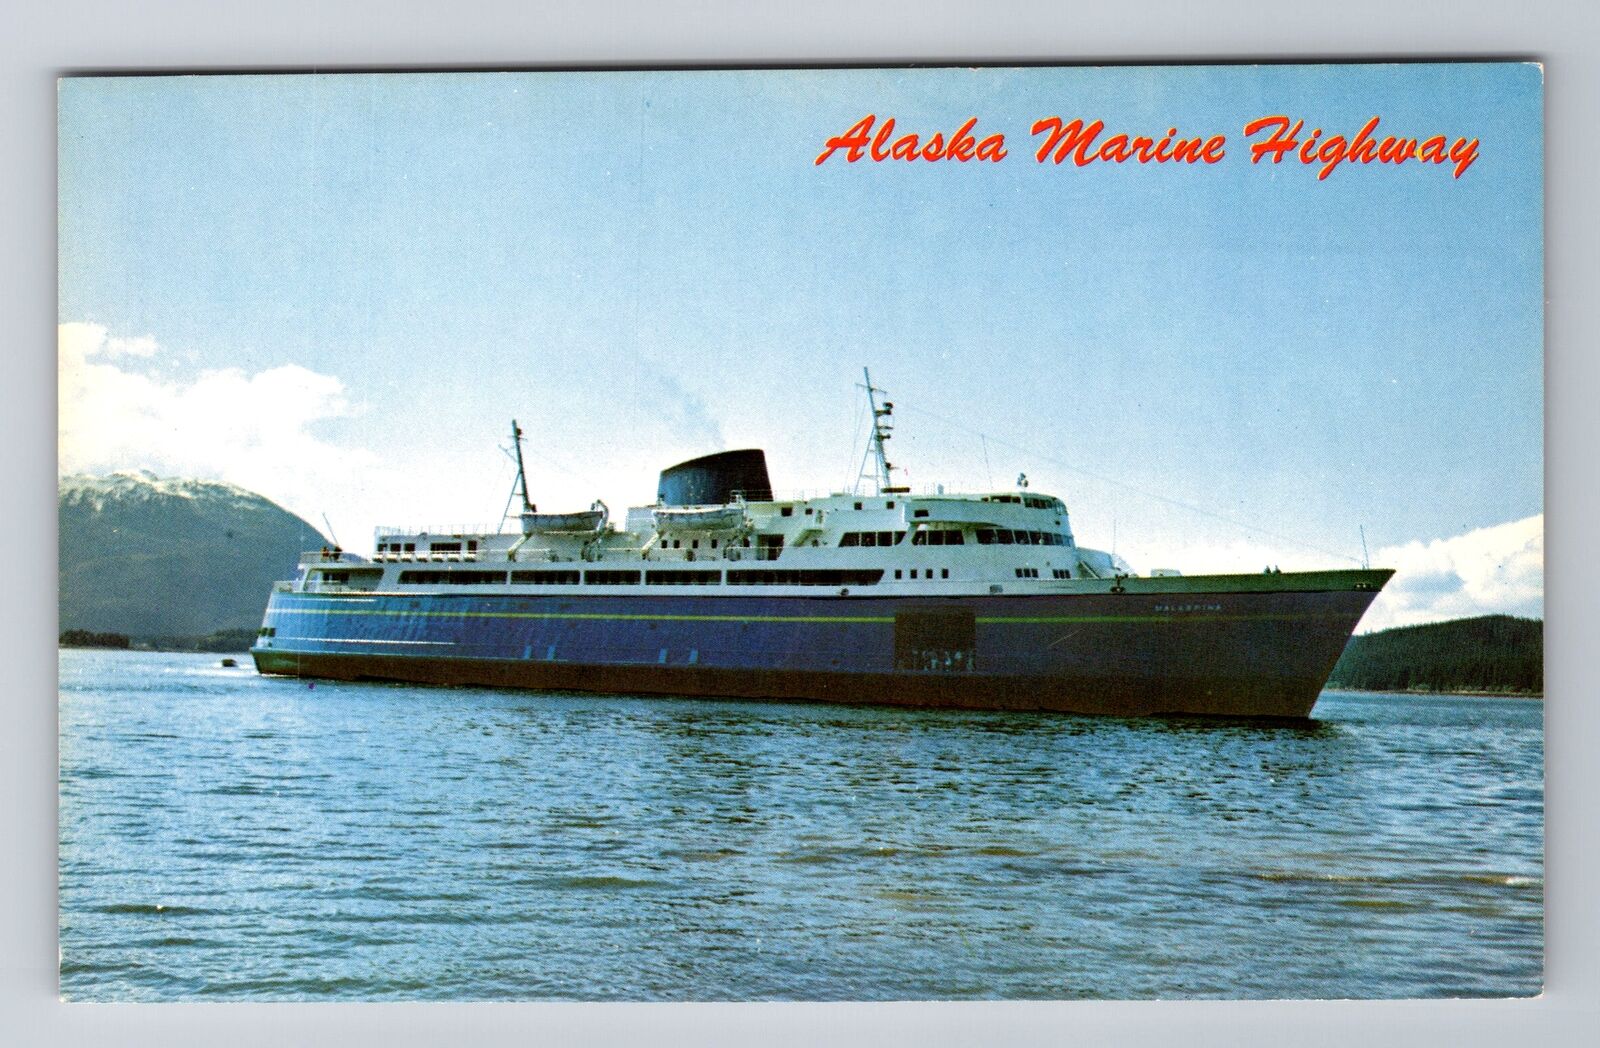 Ferry on Alaska Marine Highway, MV Malaspina, Antique Vintage Souvenir Postcard